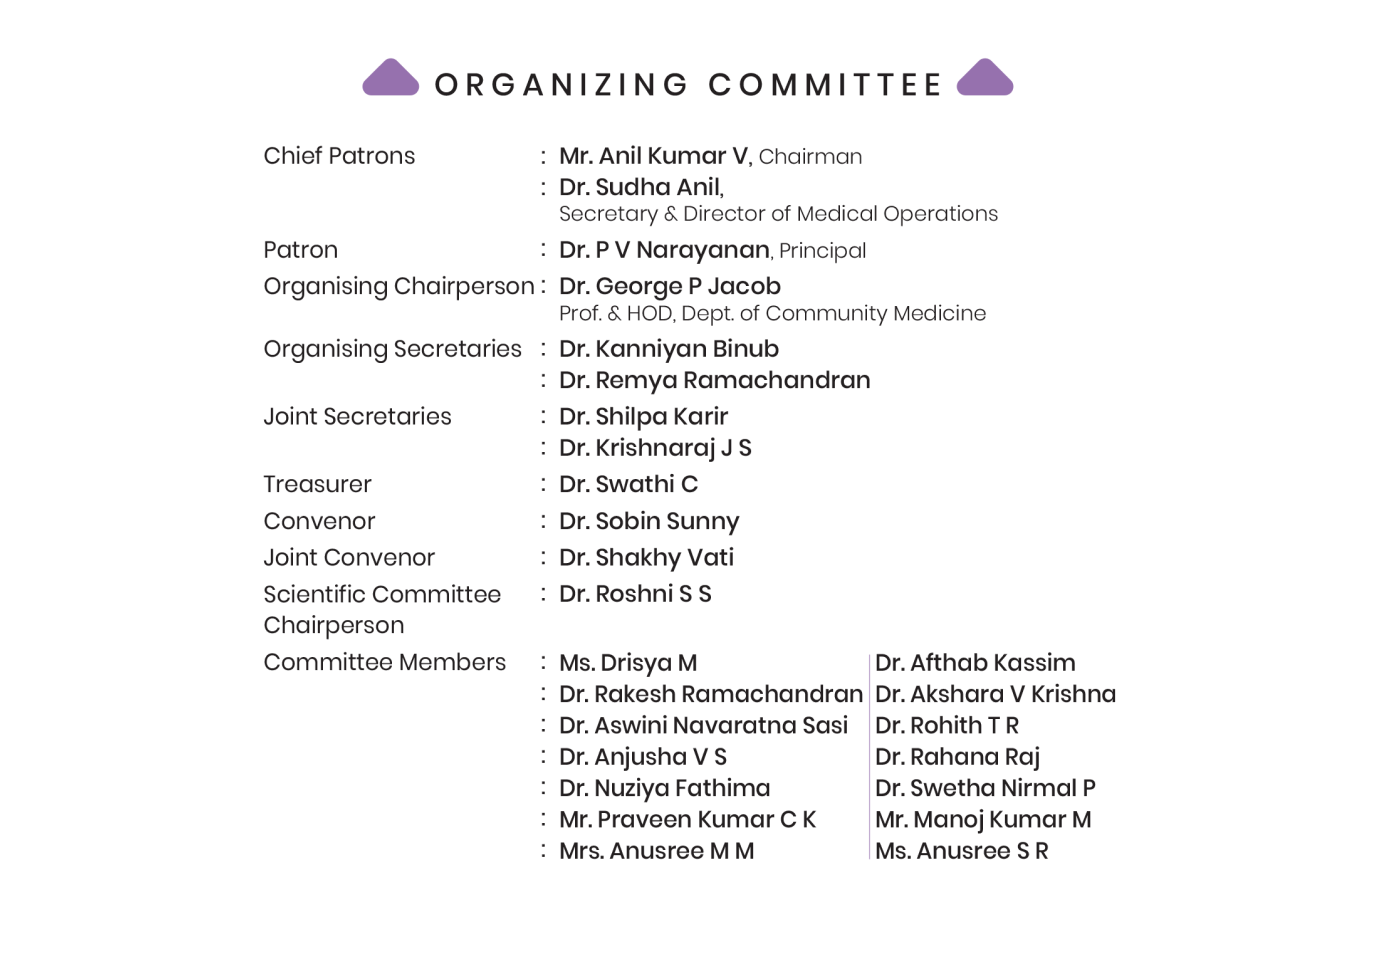 Organizing Committee image